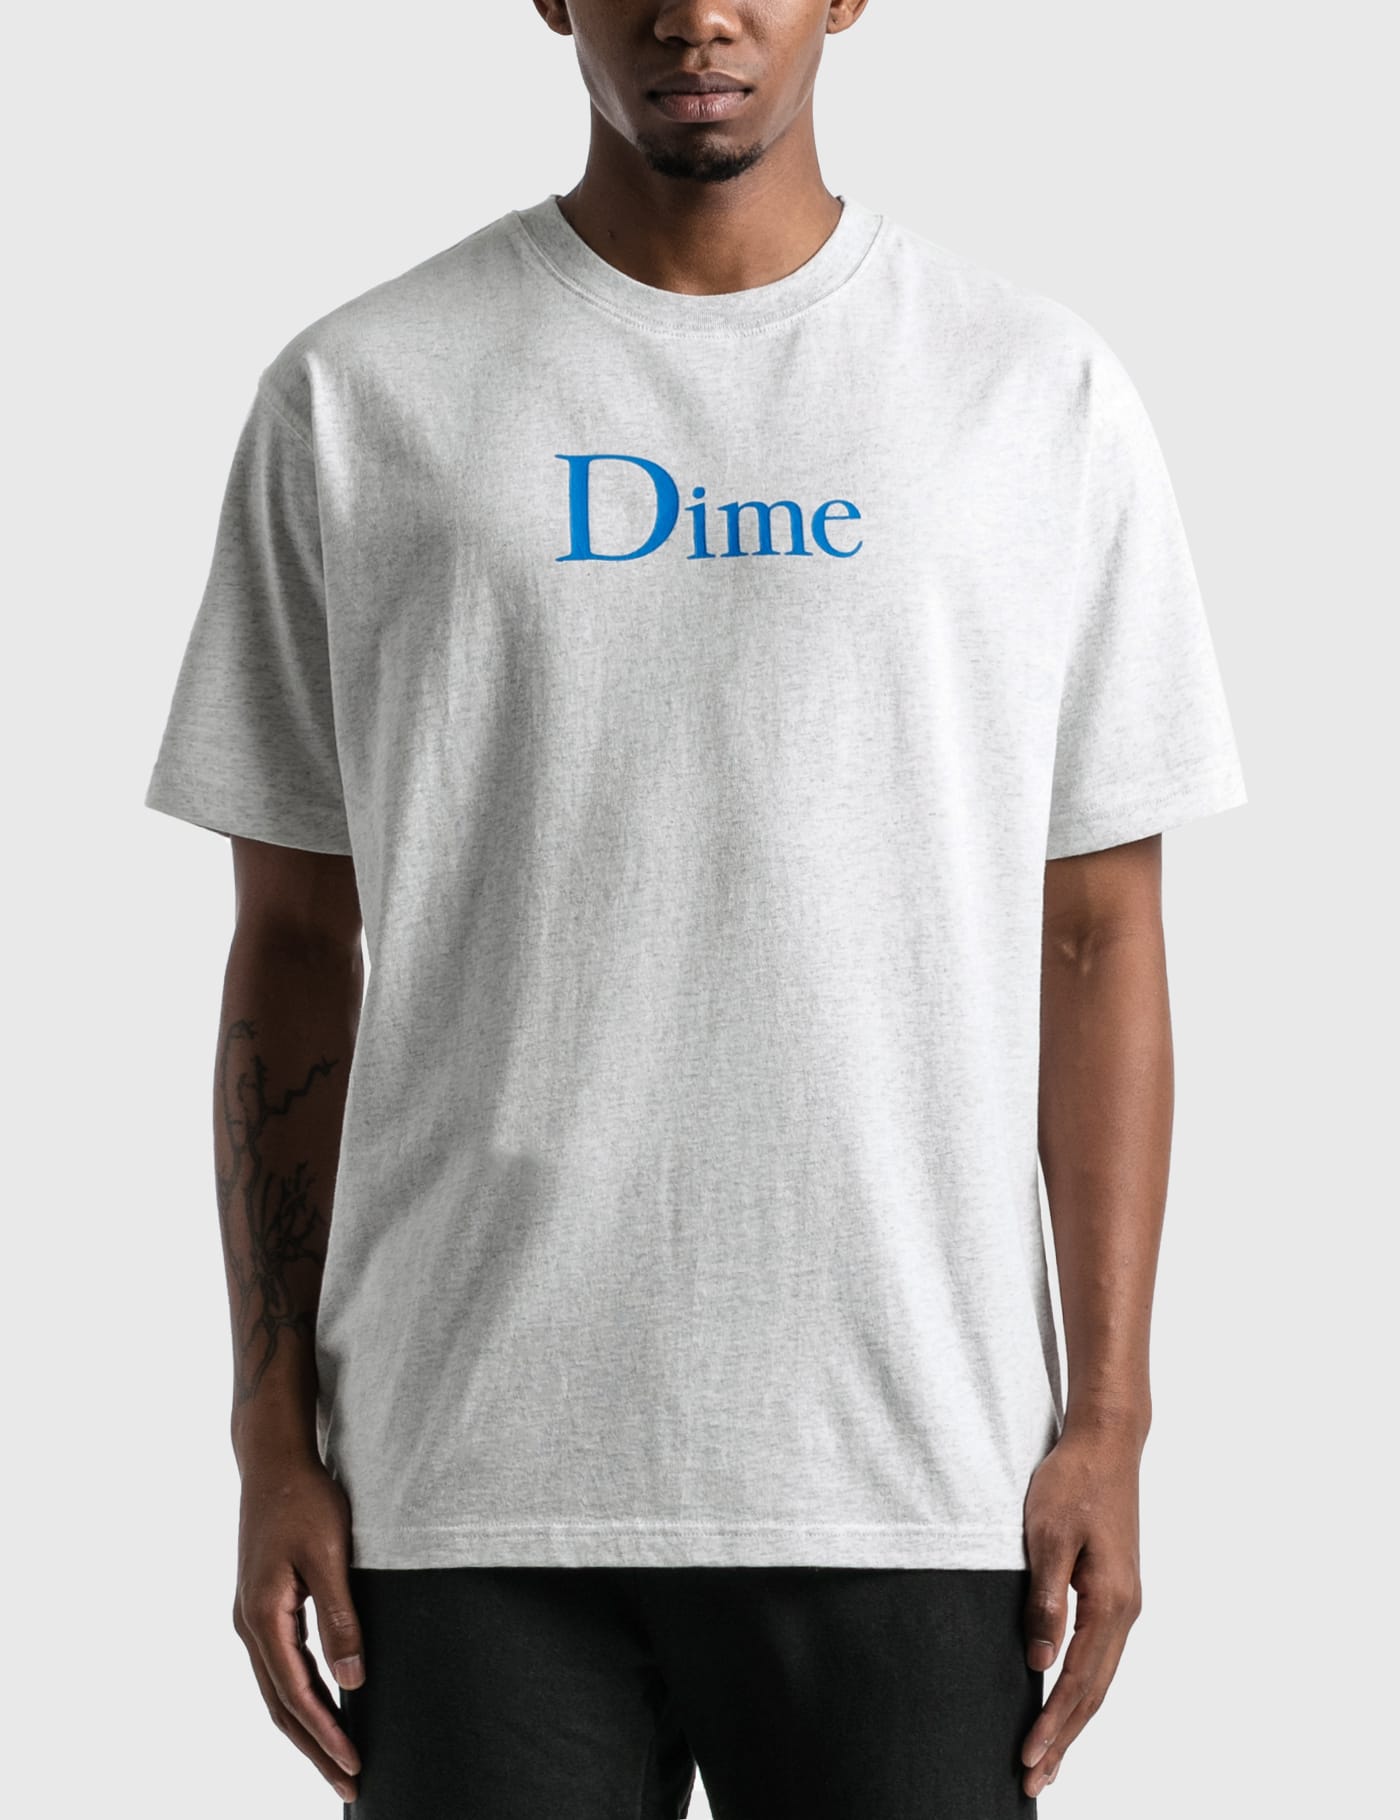 Dime T Shirt Flash Sales, 57% OFF | www.ingeniovirtual.com